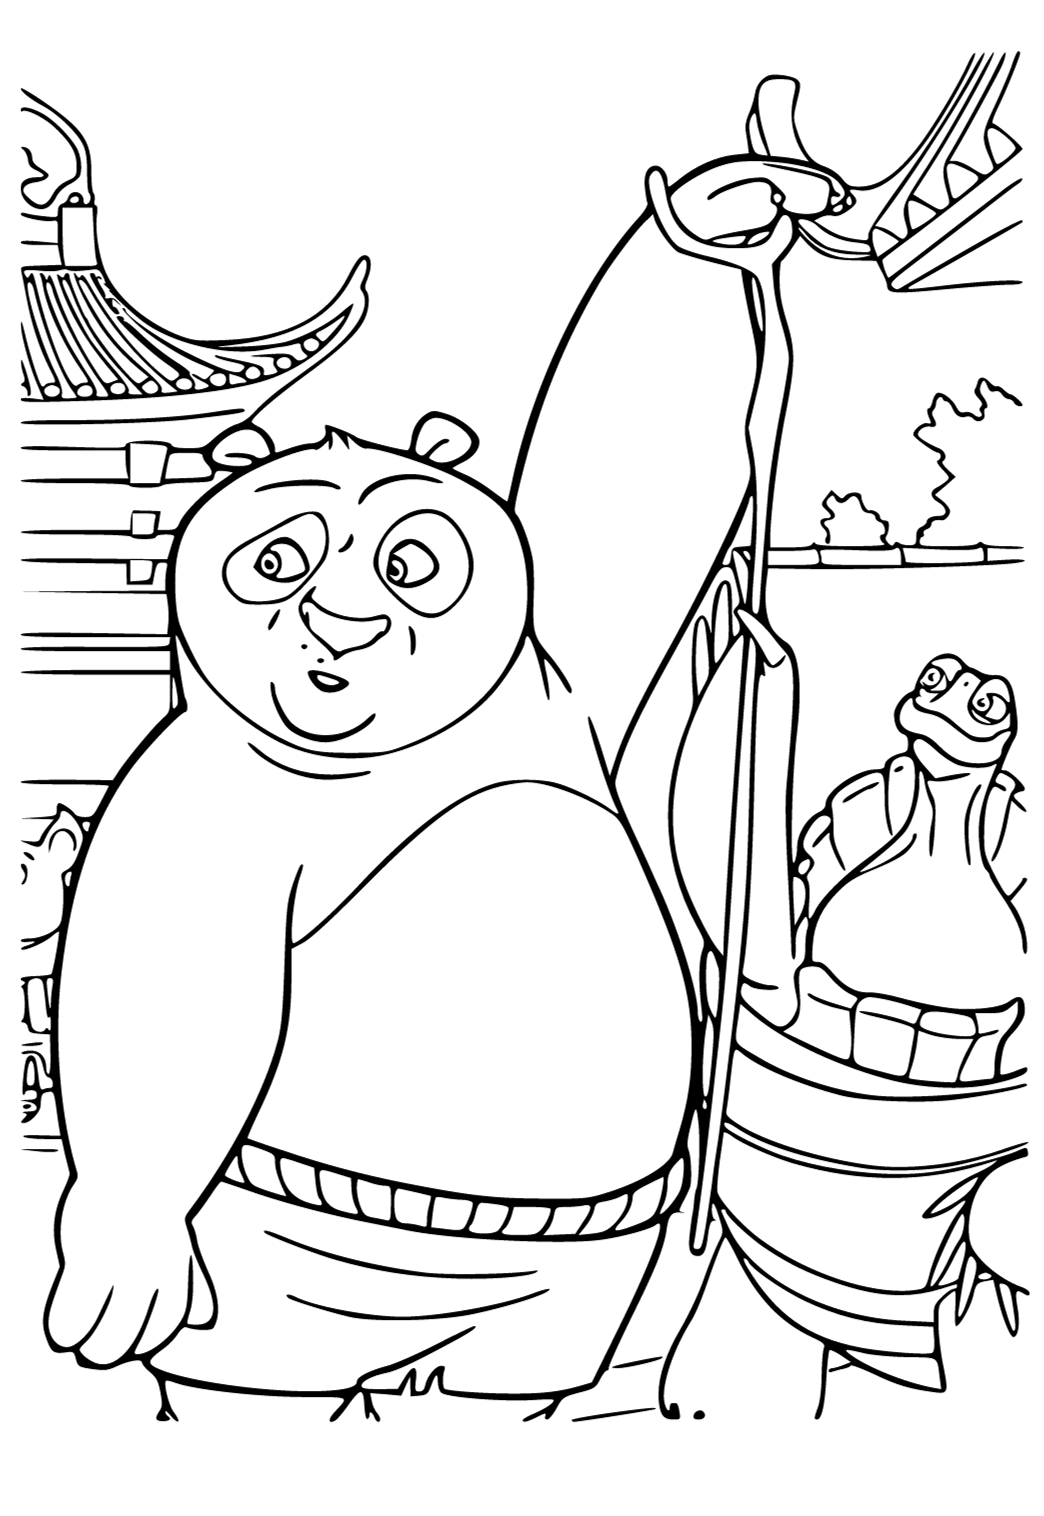 Panda fofo, alegre, legal, fácil de colorir, desenho infantil